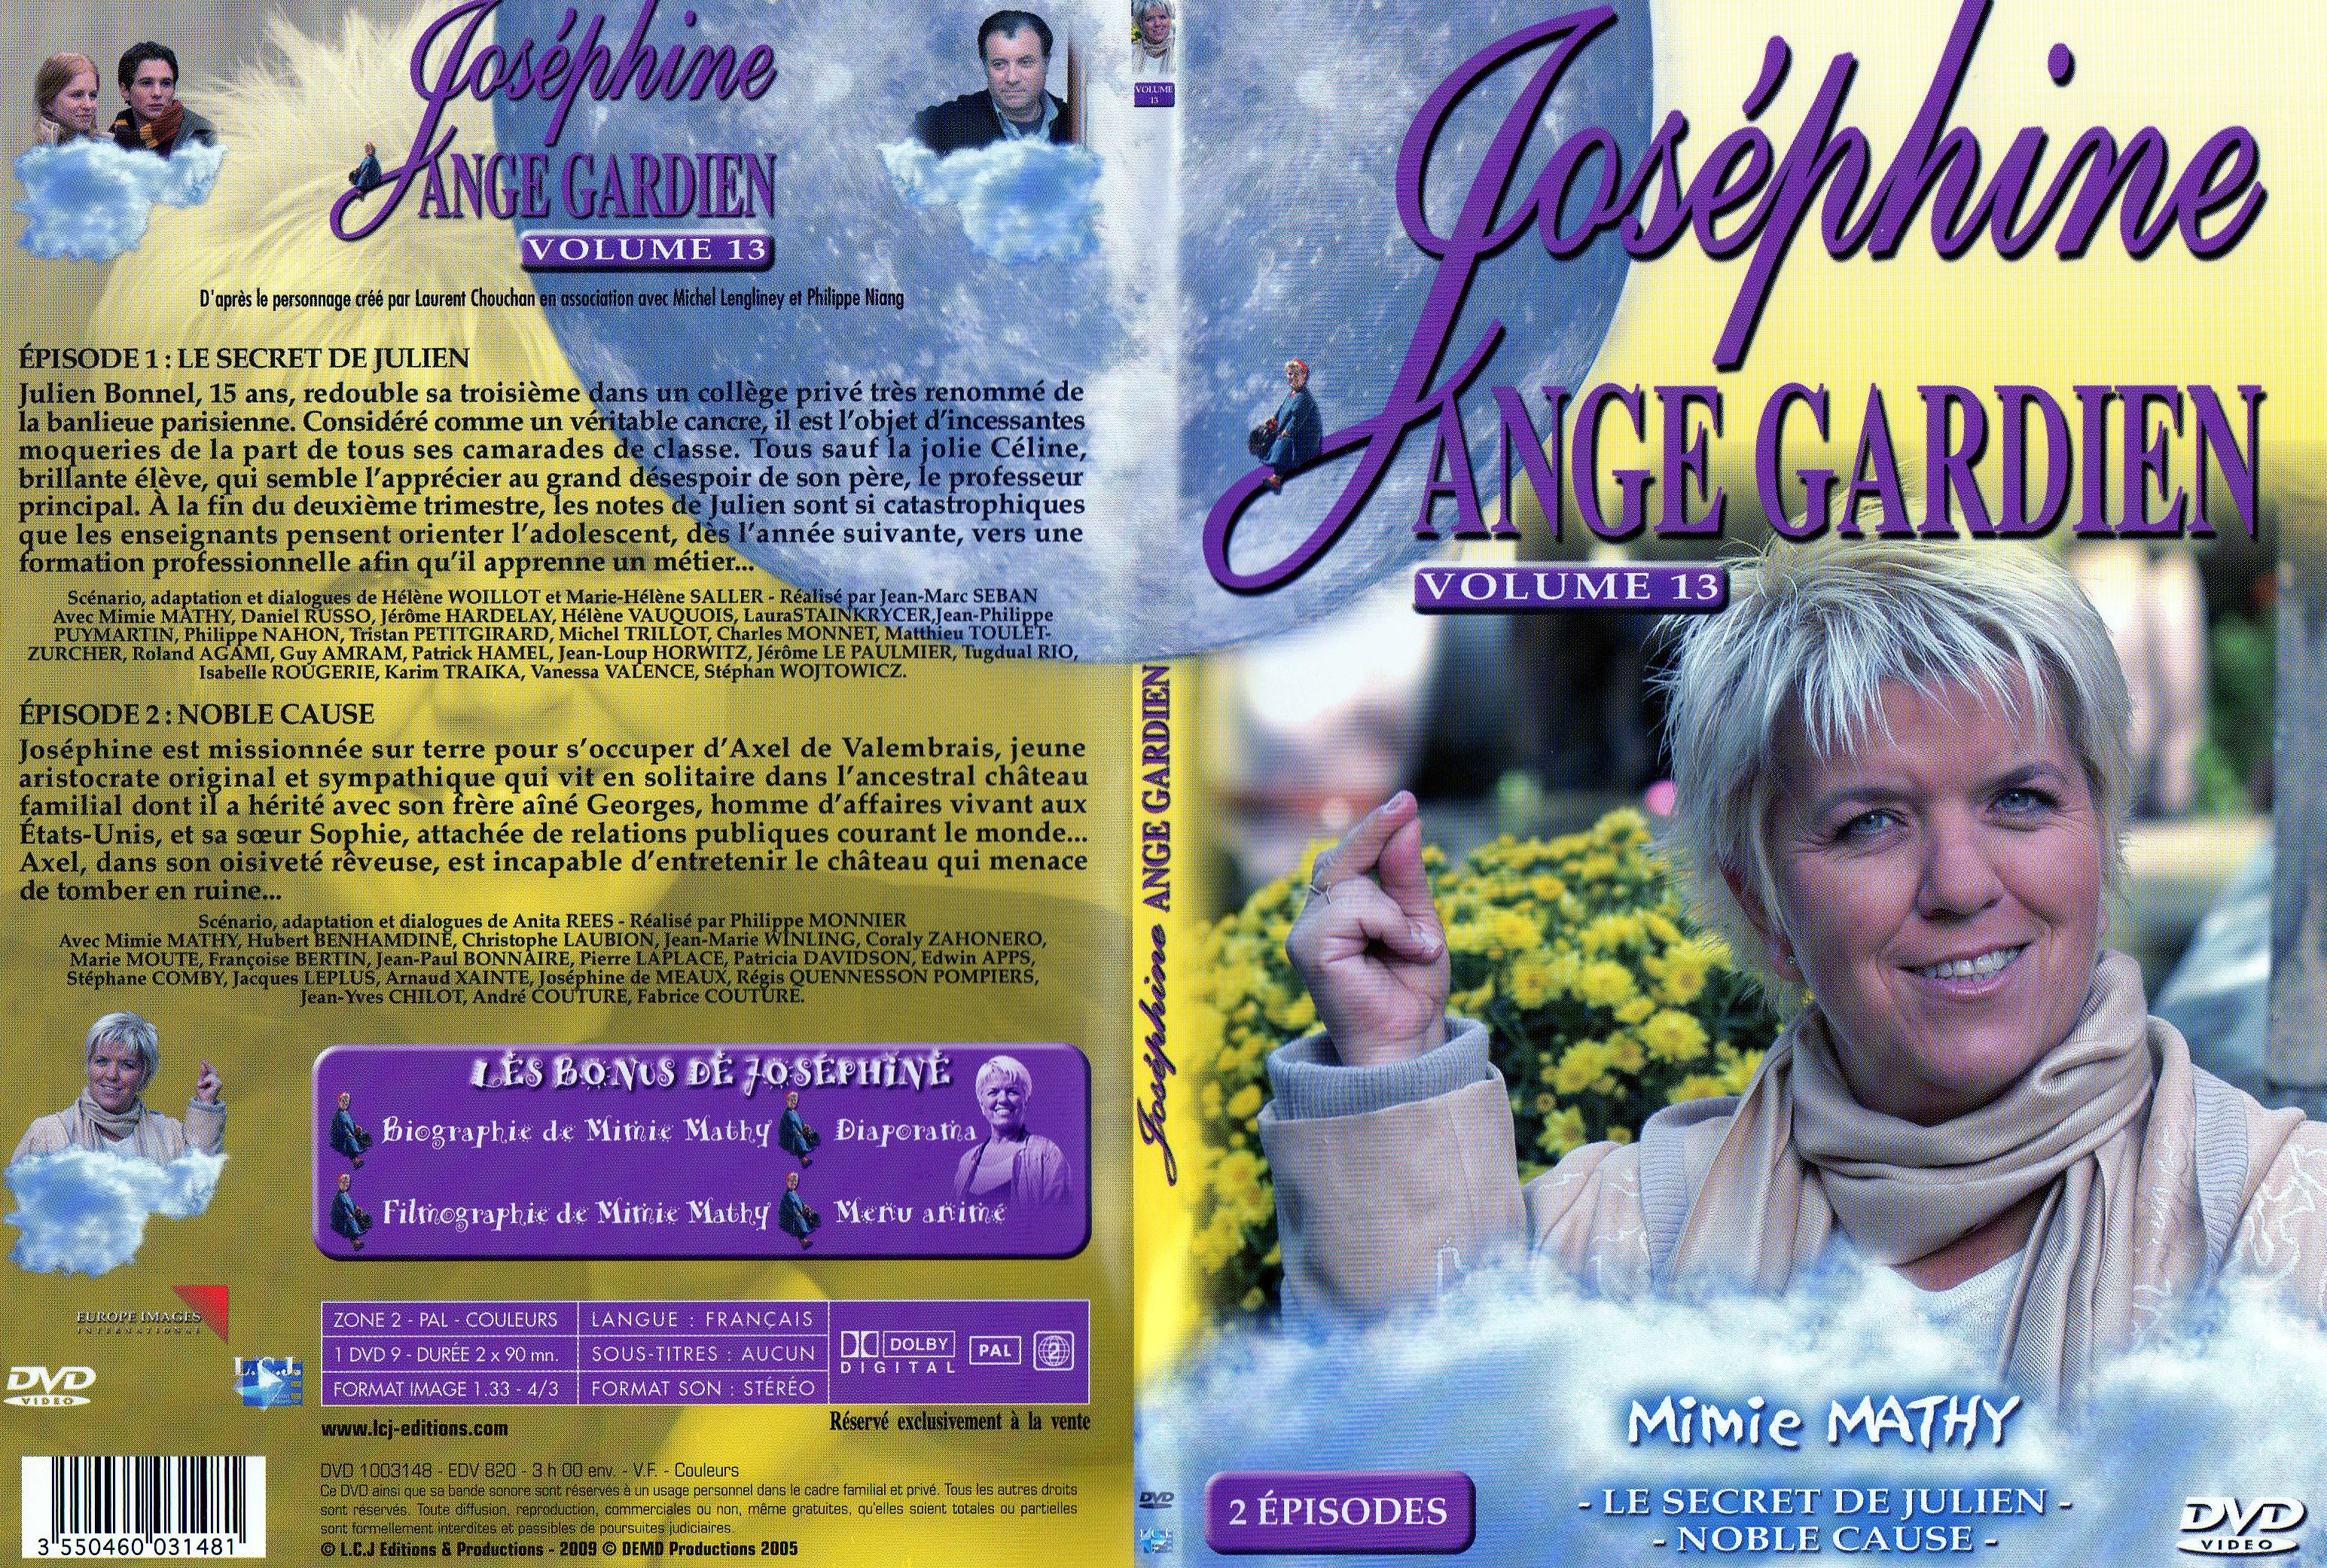 Jaquette DVD Josphine Ange Gardien saison 3 DVD 13